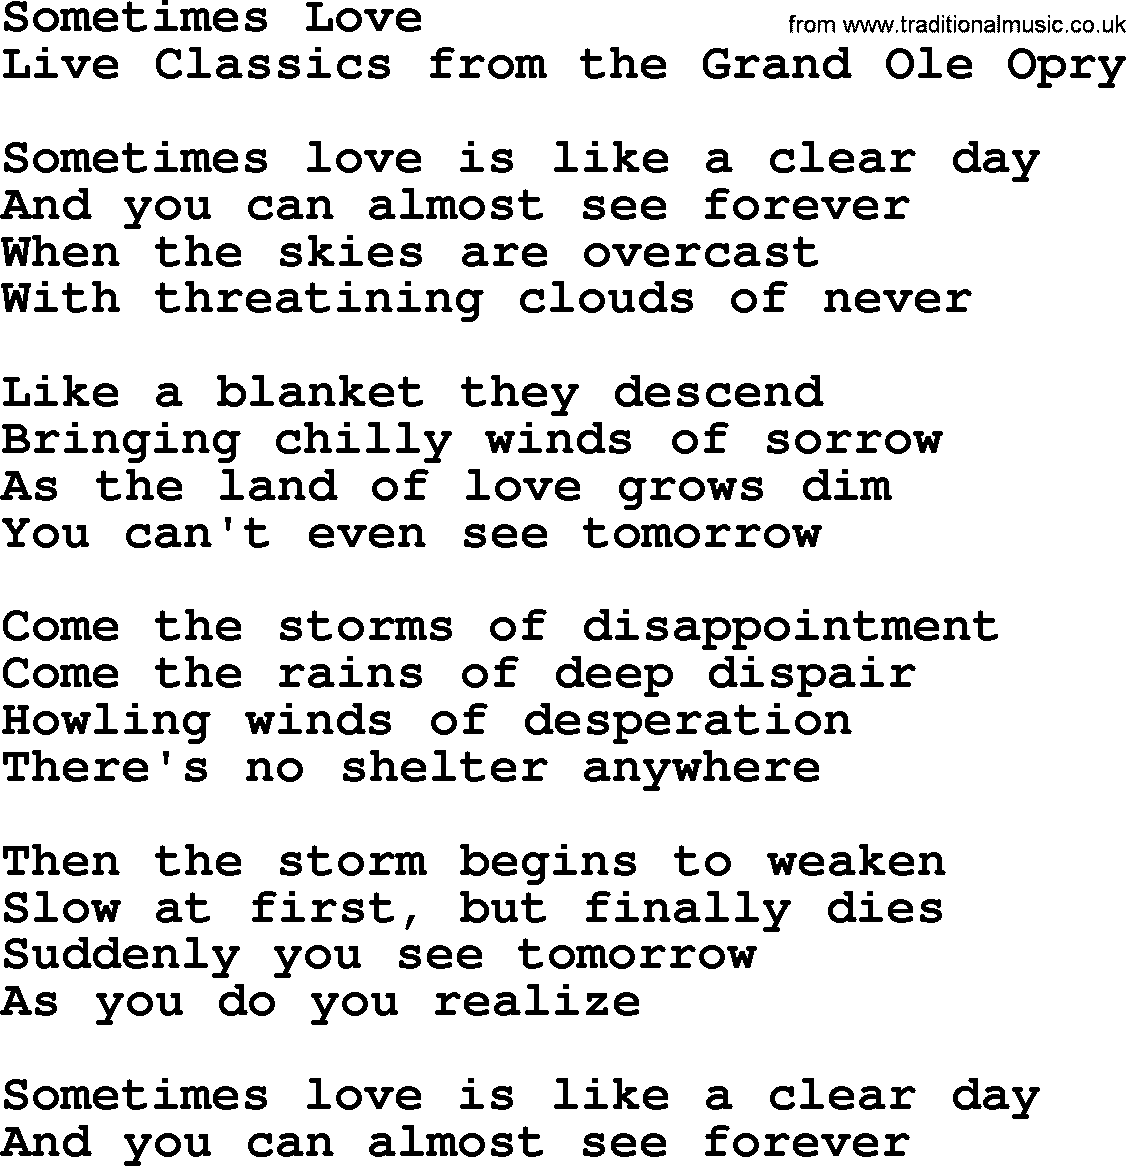 Marty Robbins song: Sometimes Love, lyrics